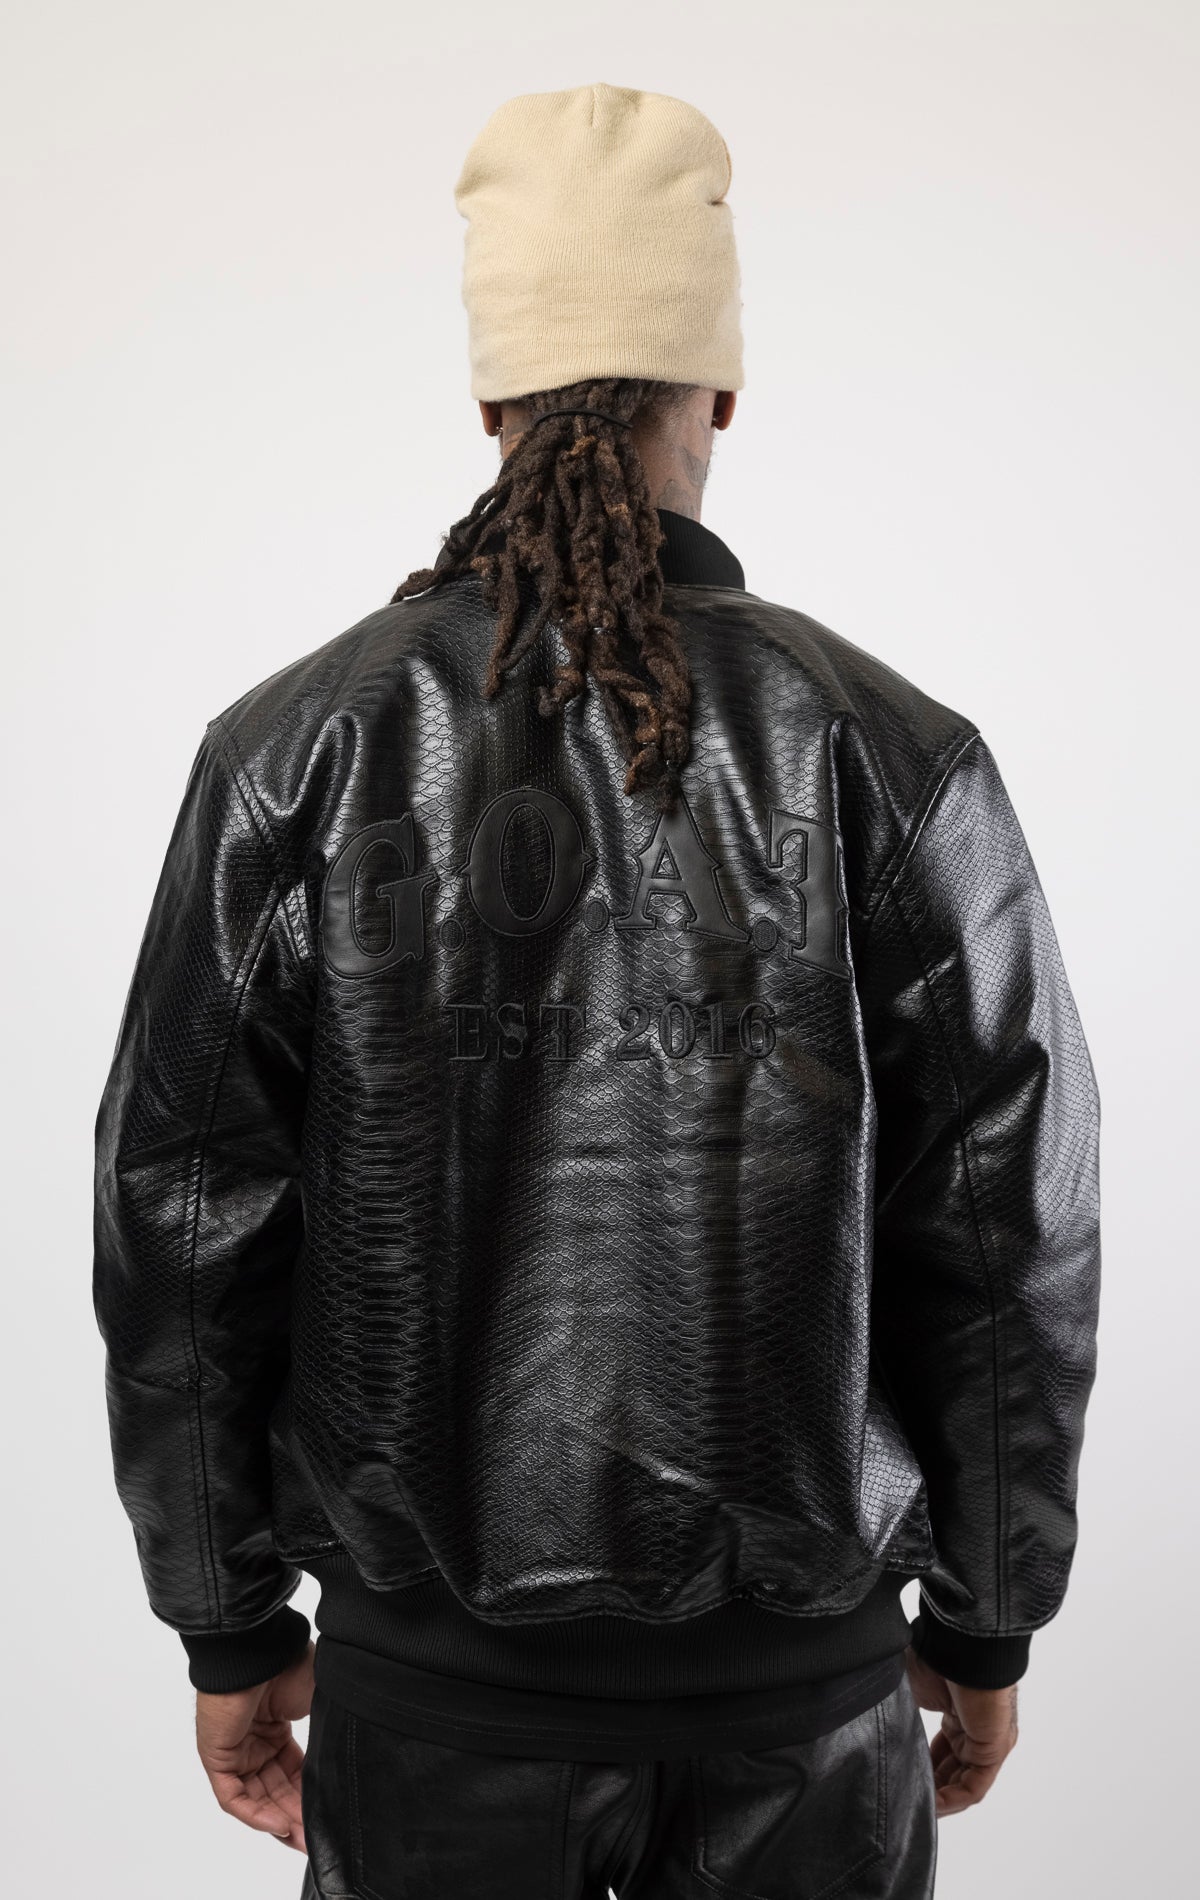 Superior leather textured bomber jacket